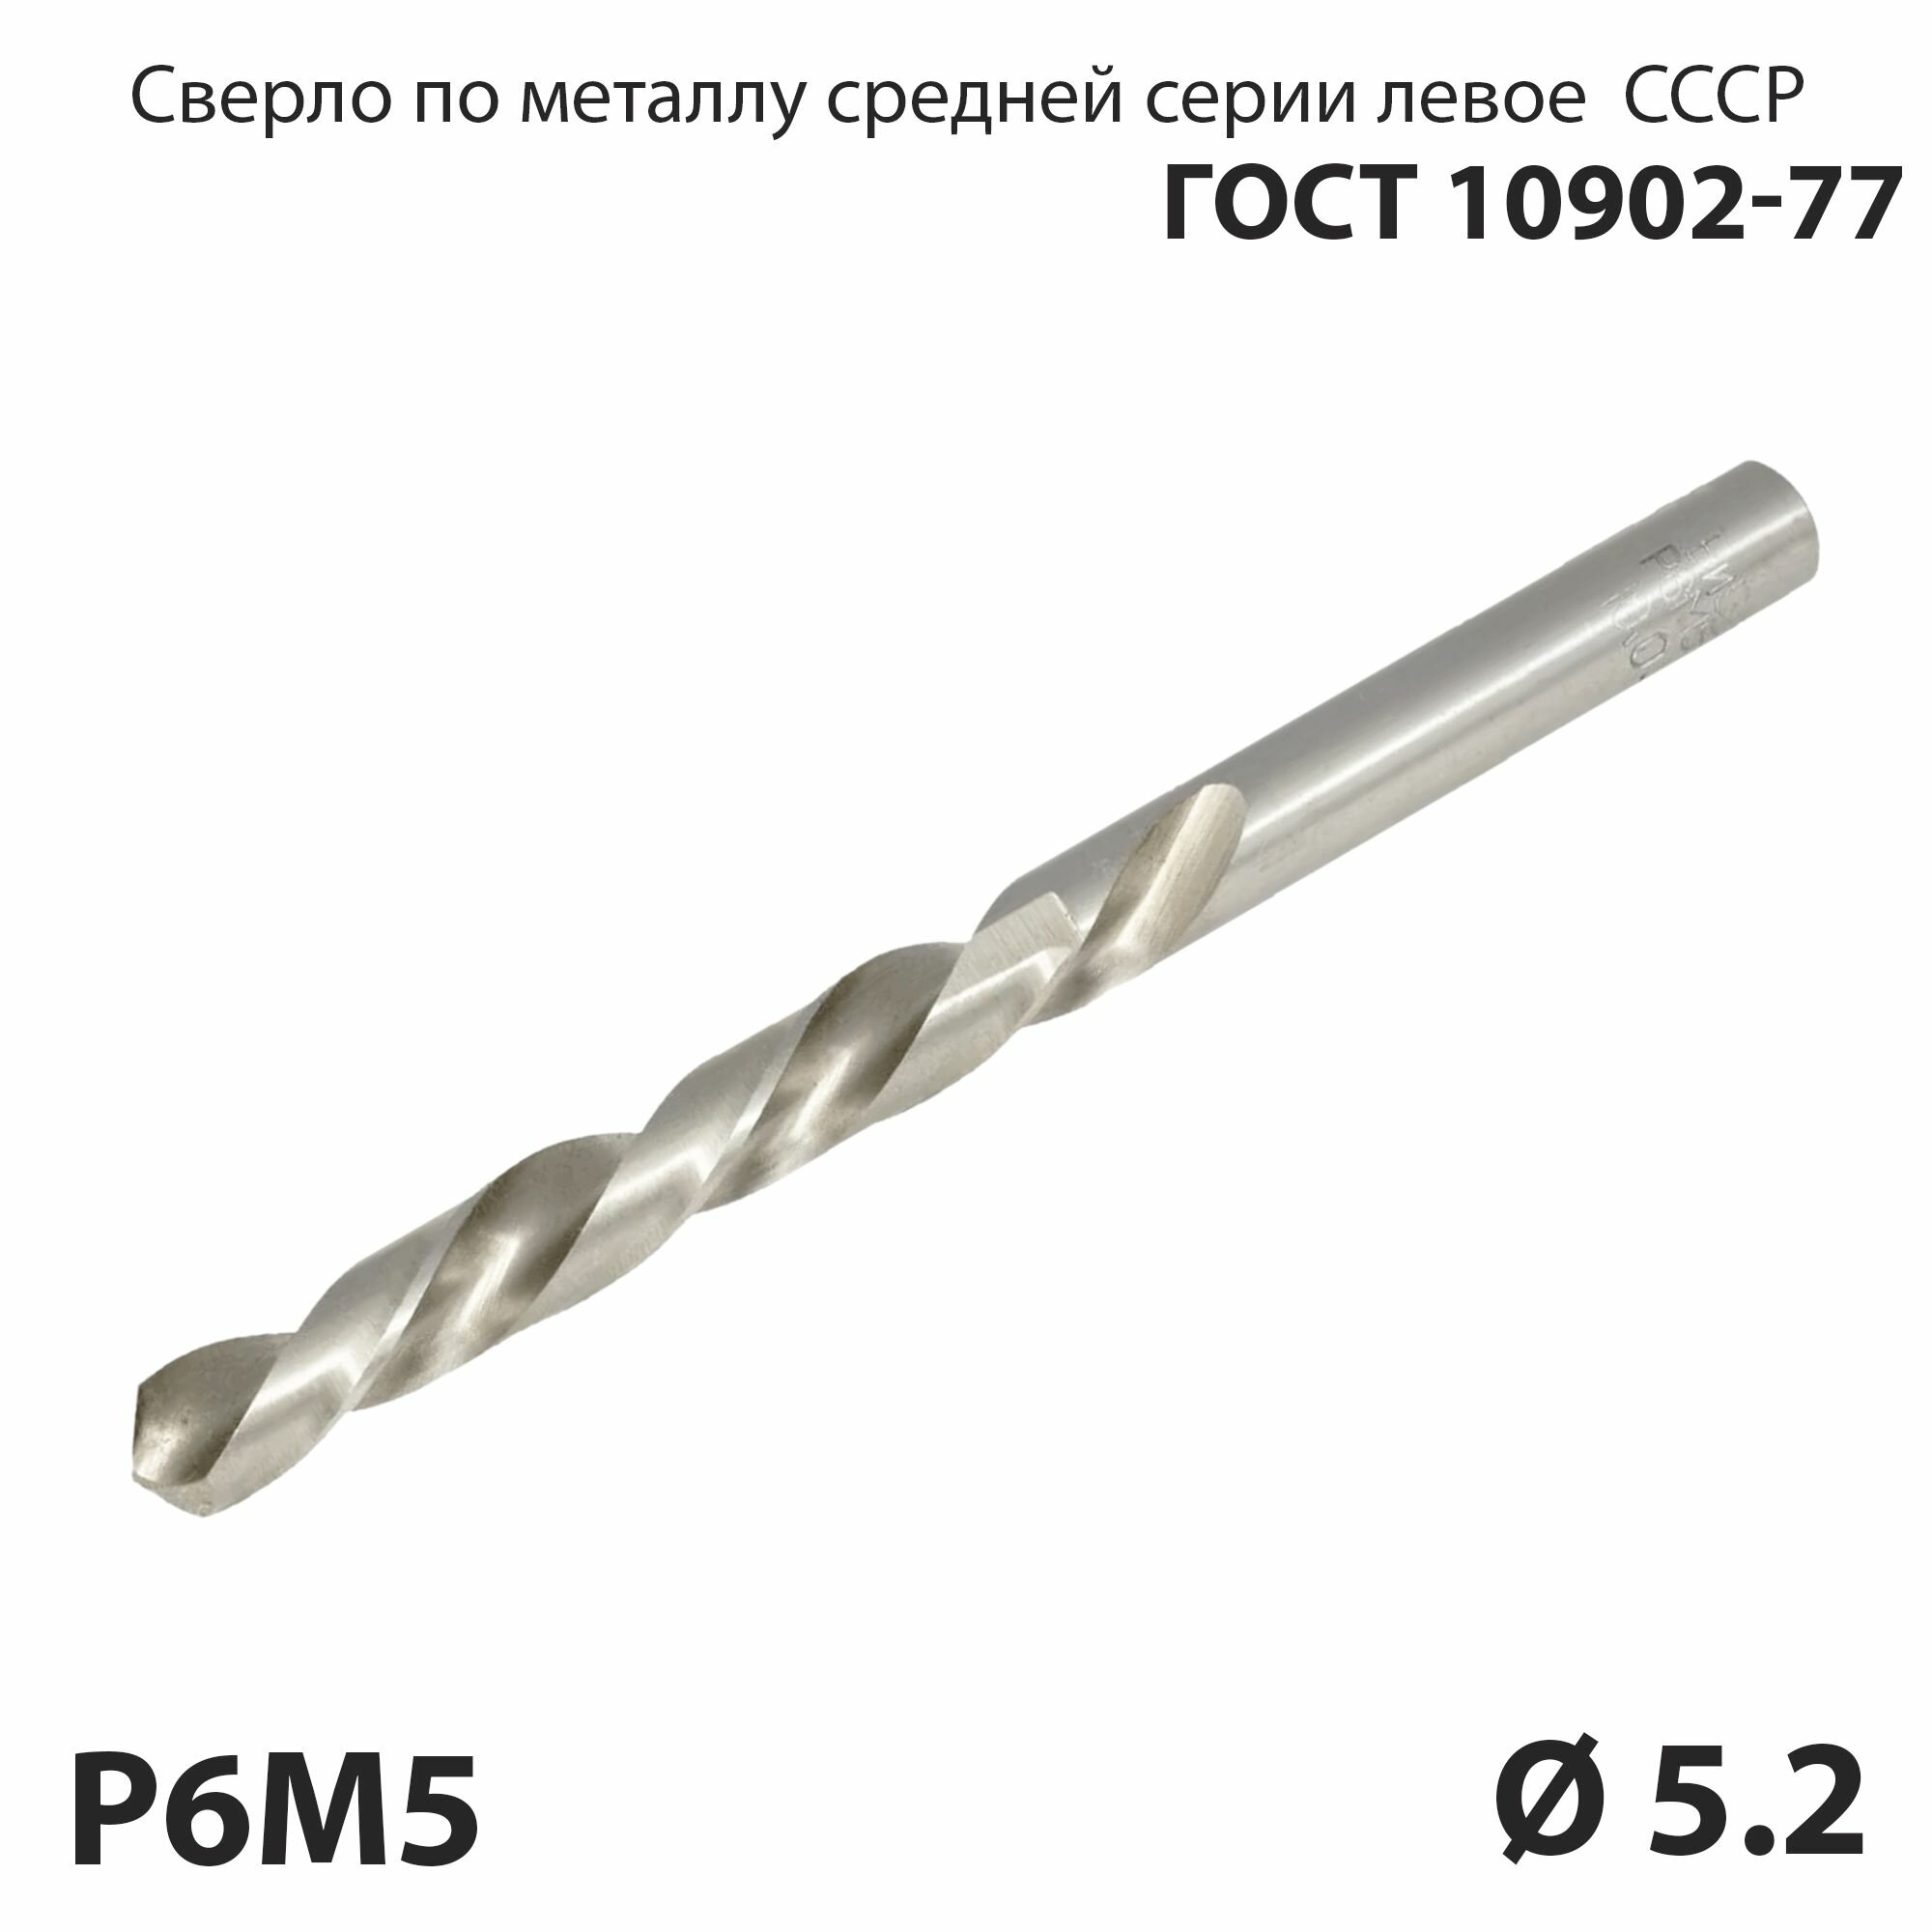 Сверло по металлу 5,2 мм средней серии P6М5 СССР ГОСТ 10902-77 (спиральное левое, ц/х)